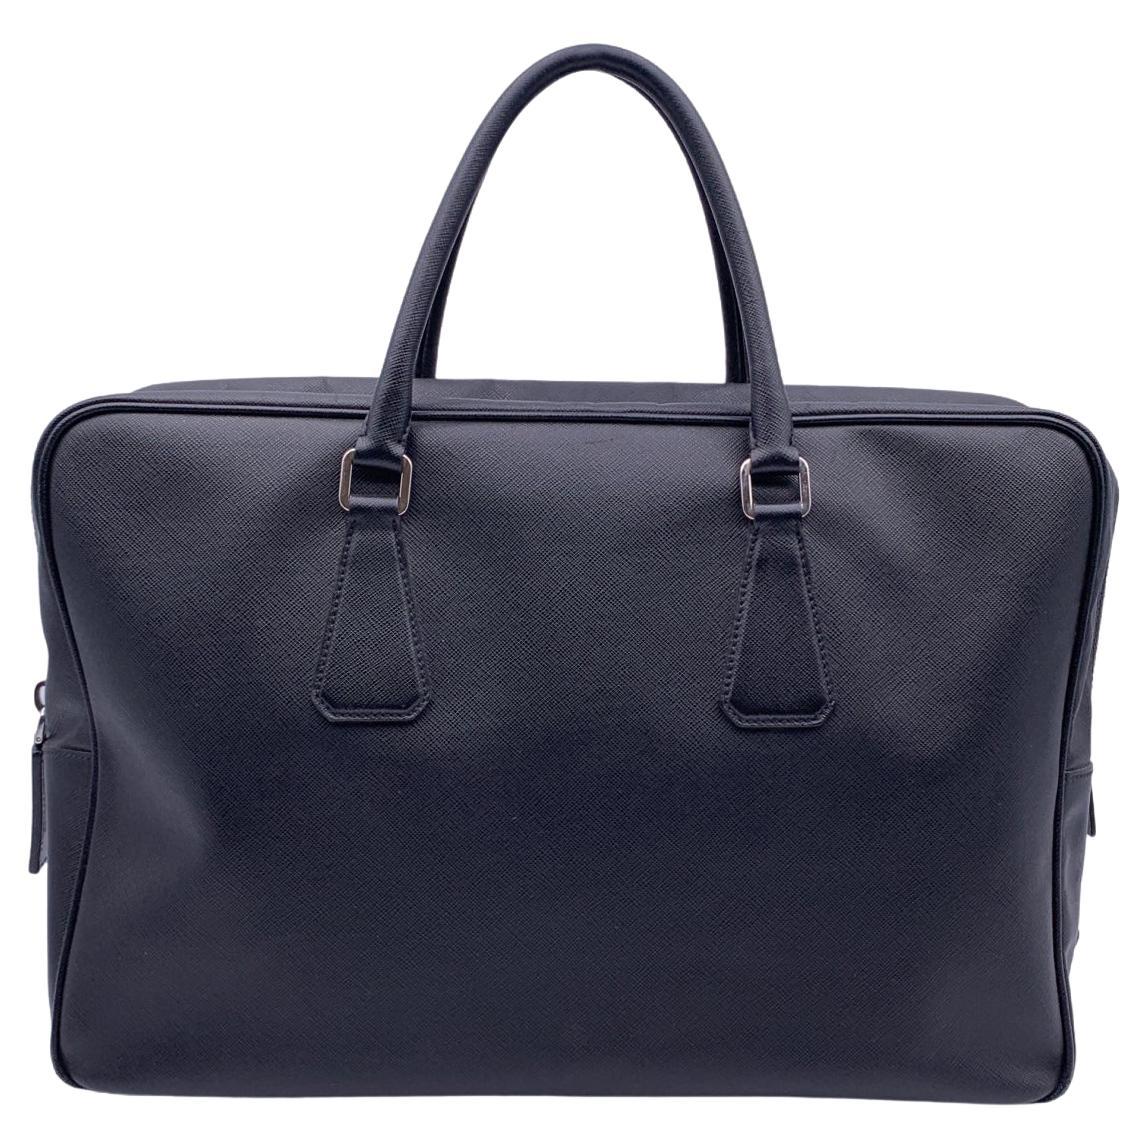 Prada Black Saffiano Leather Briefcase Satchel Zip Top Work Bag For Sale